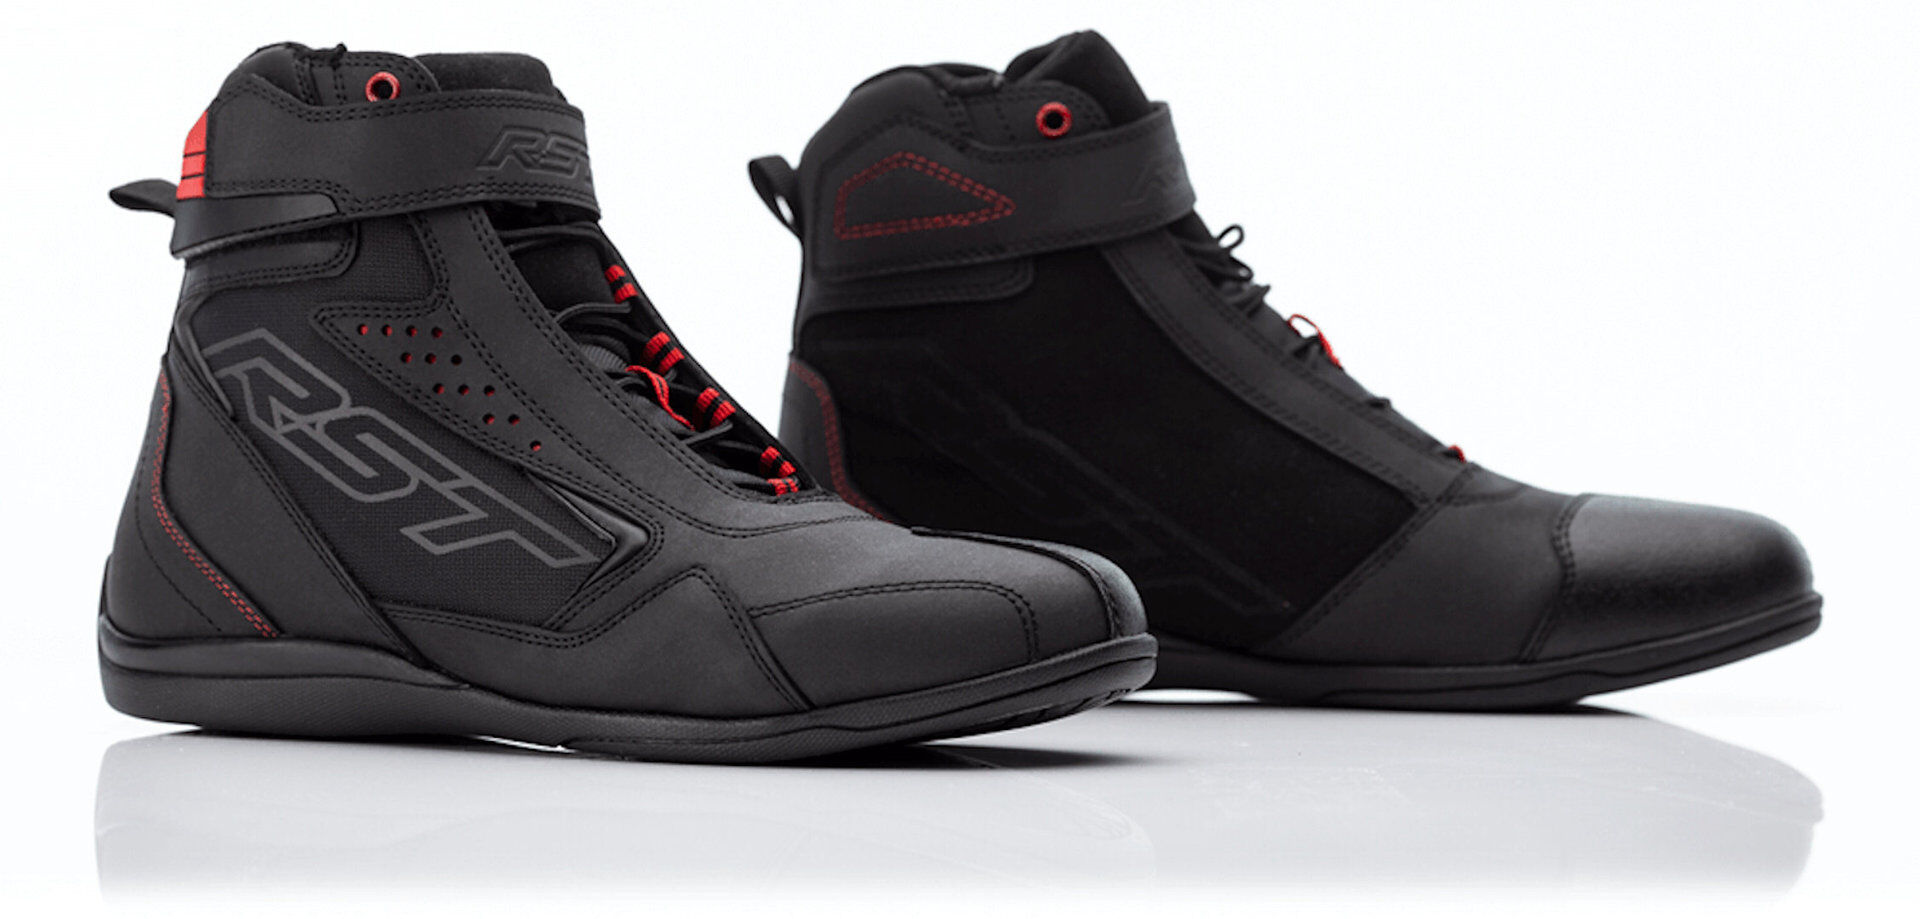 RST Frontier Zapatos de motocicleta para mujer - Negro Rojo (38)